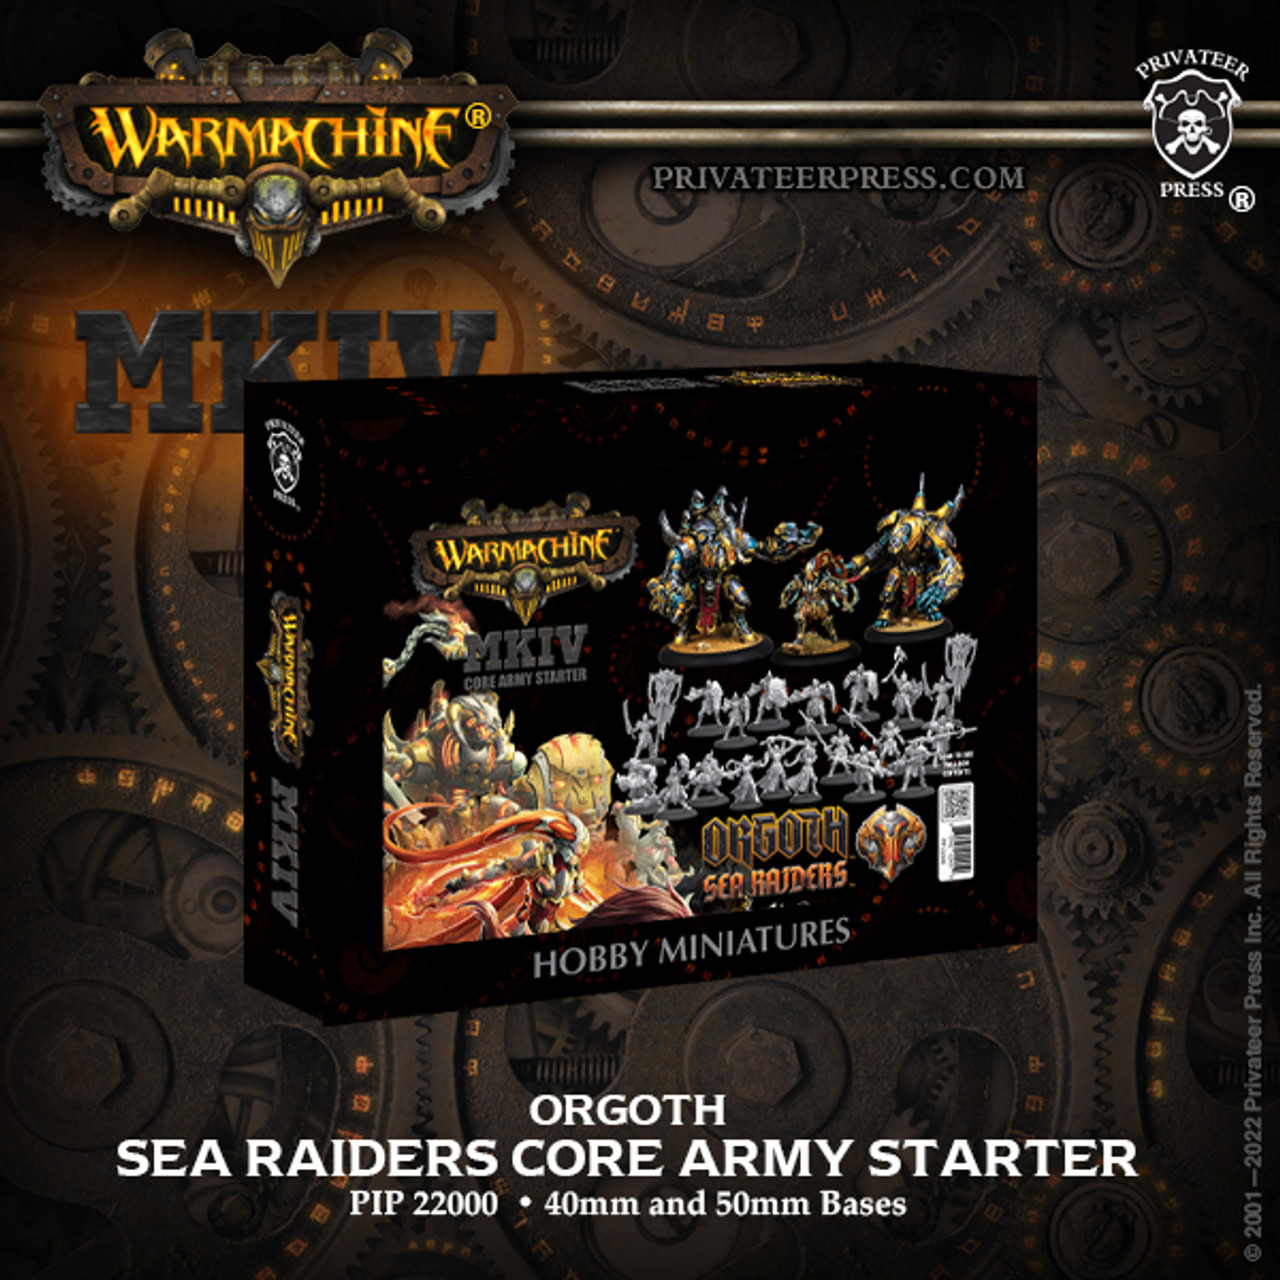 Orgoth Sea Raiders Core Army Starter - Warmachine